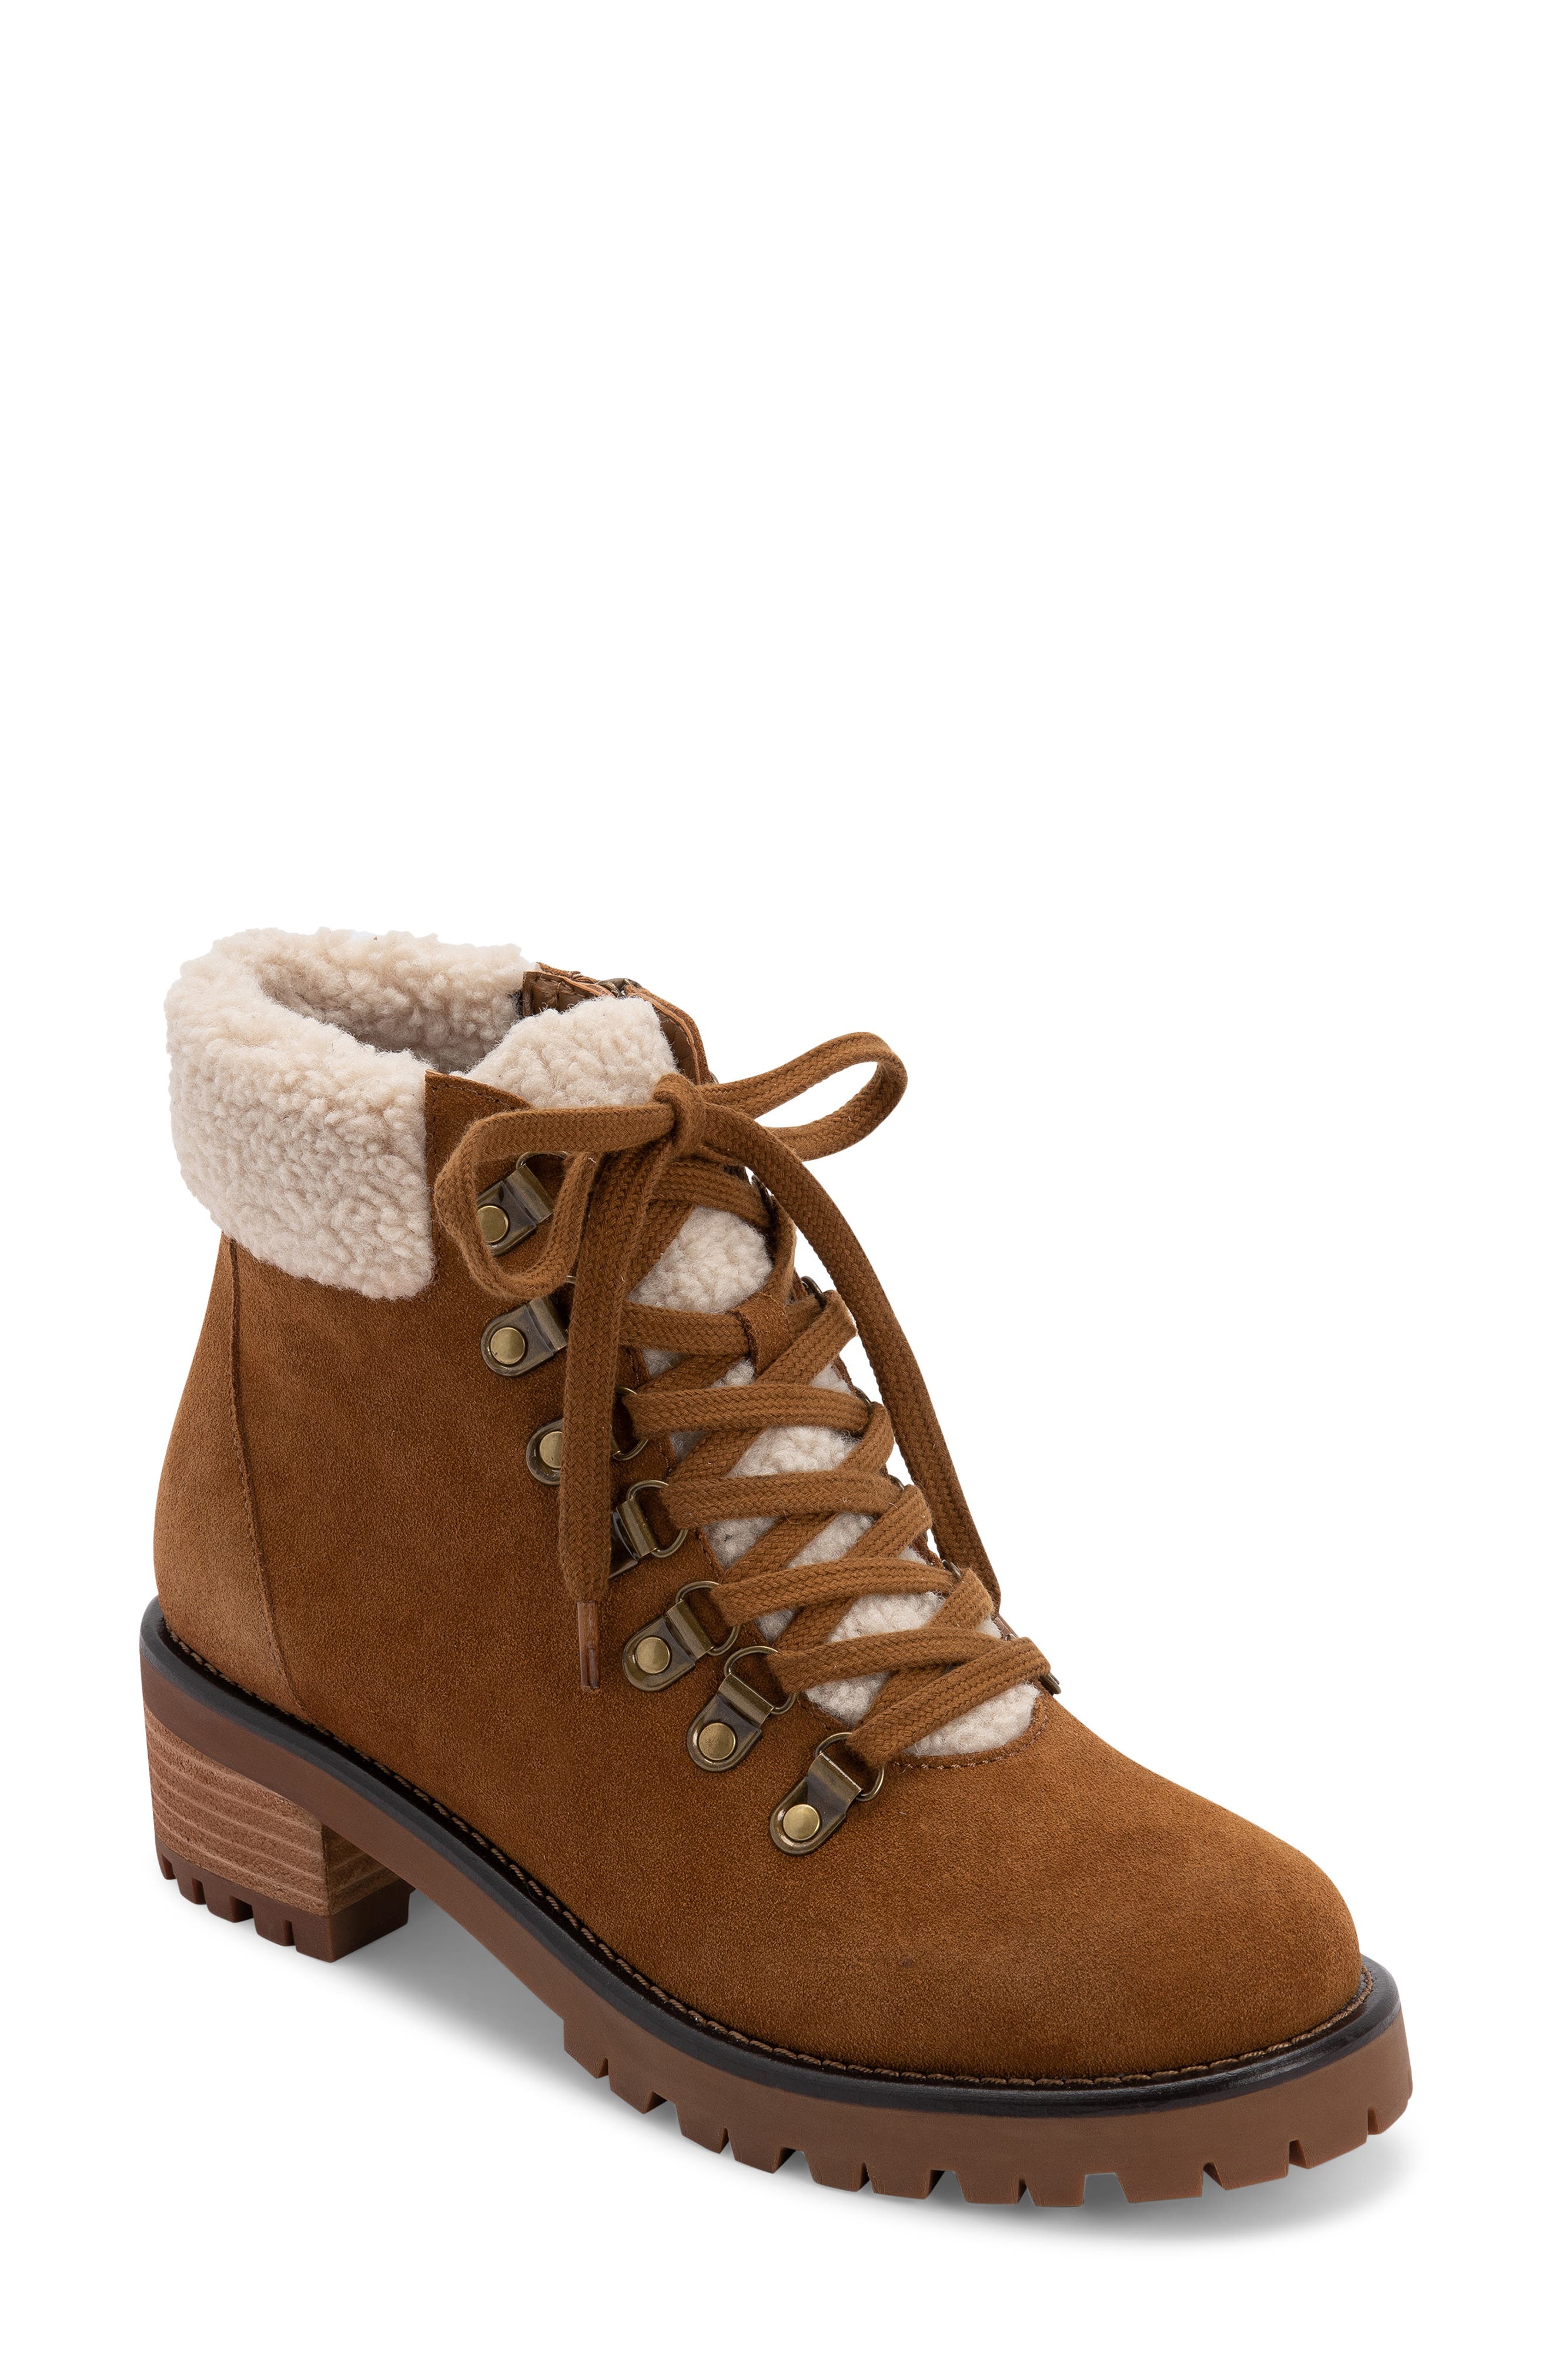 blondo women's snow boots